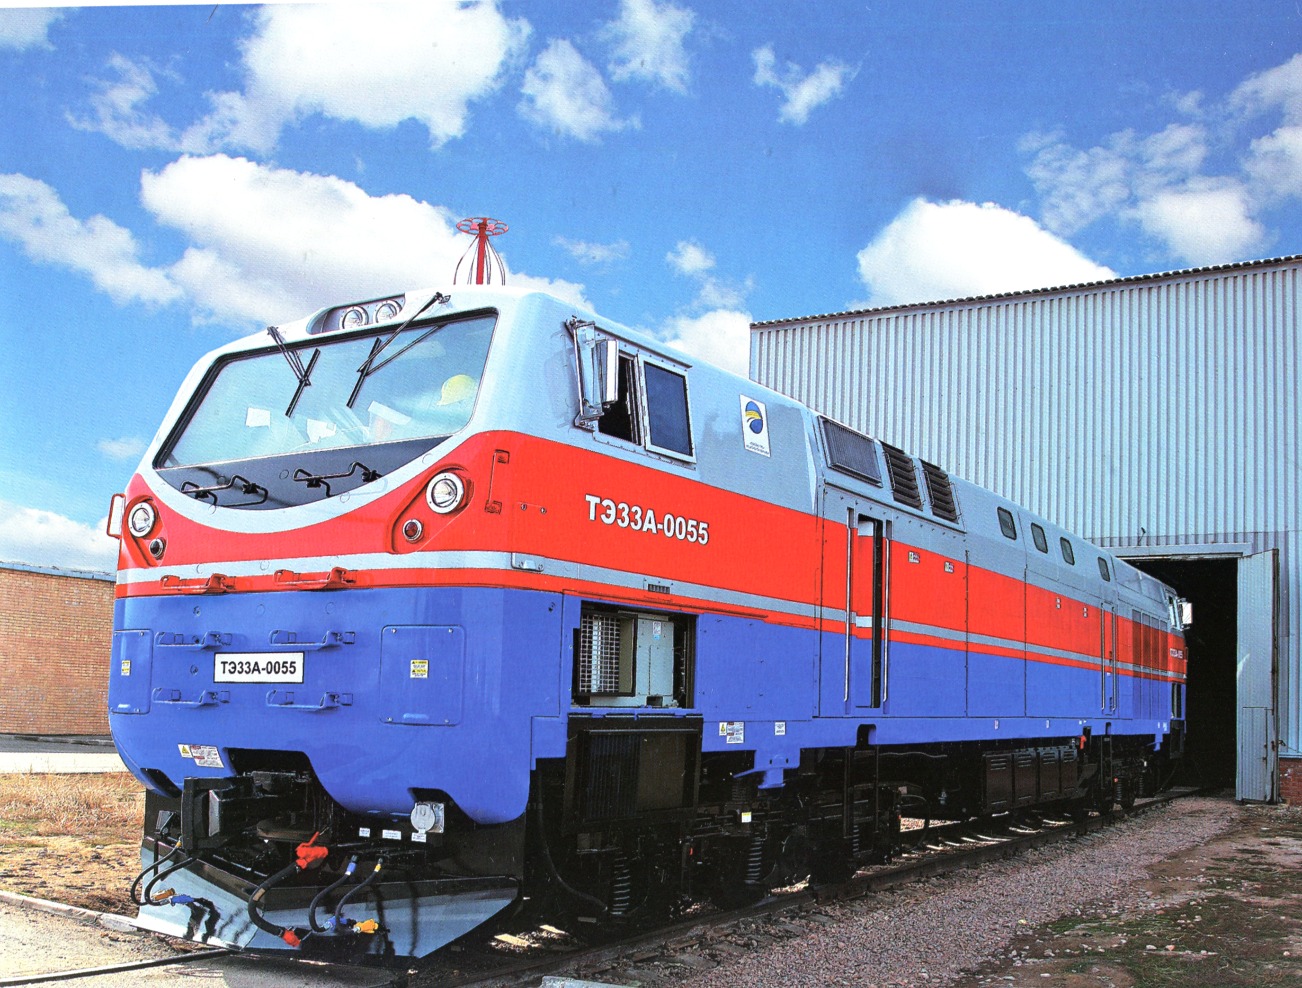 ТЭ33А-0055